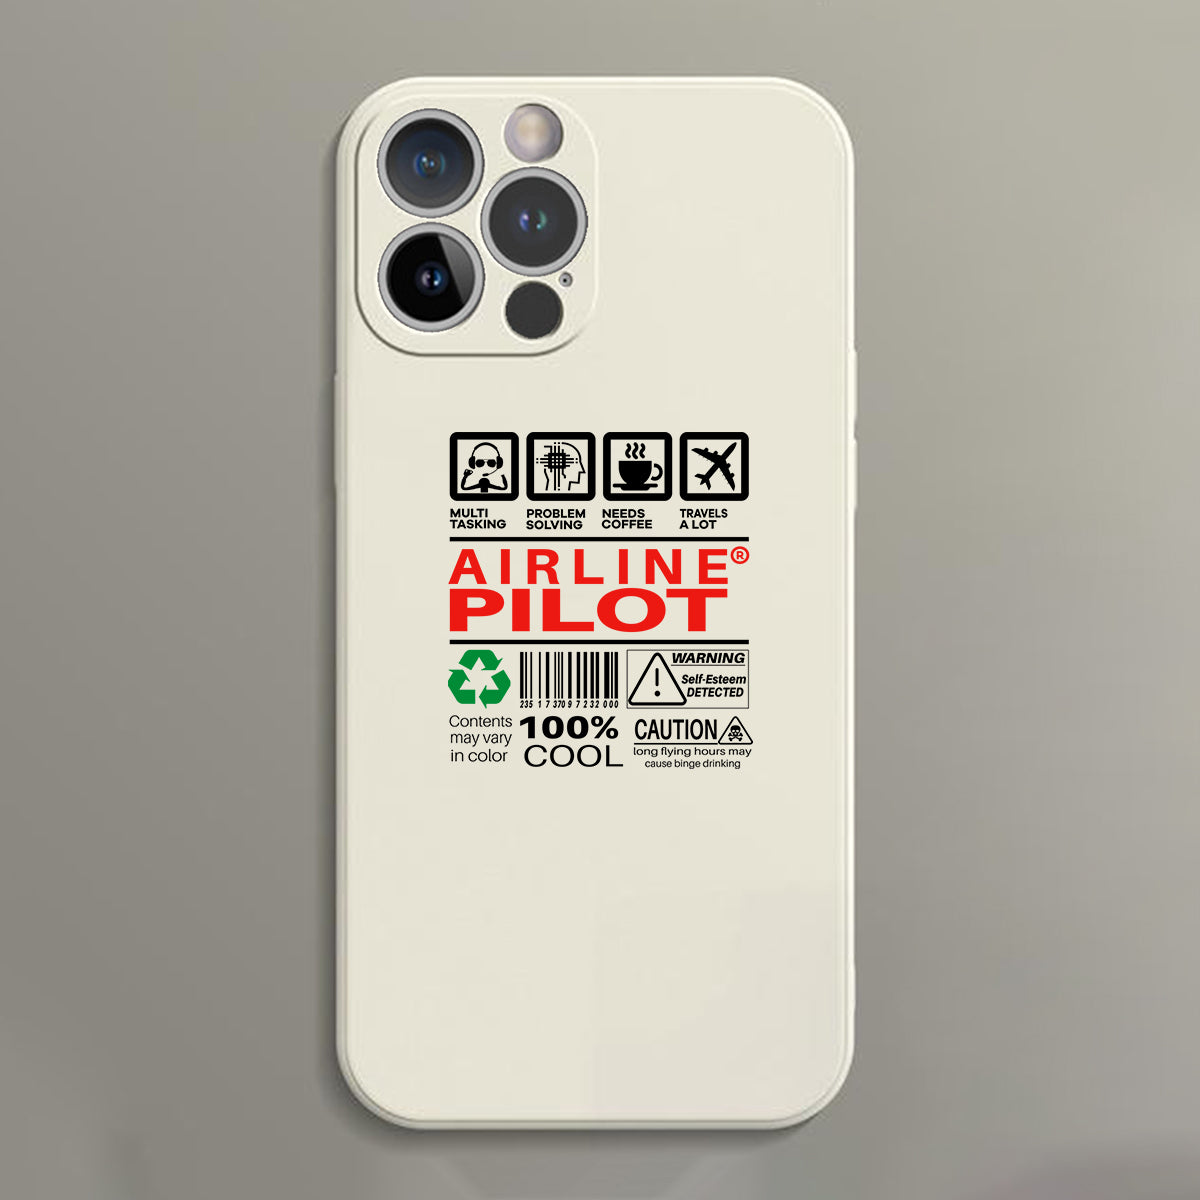 Airline Pilot Label Designed Soft Silicone iPhone Cases